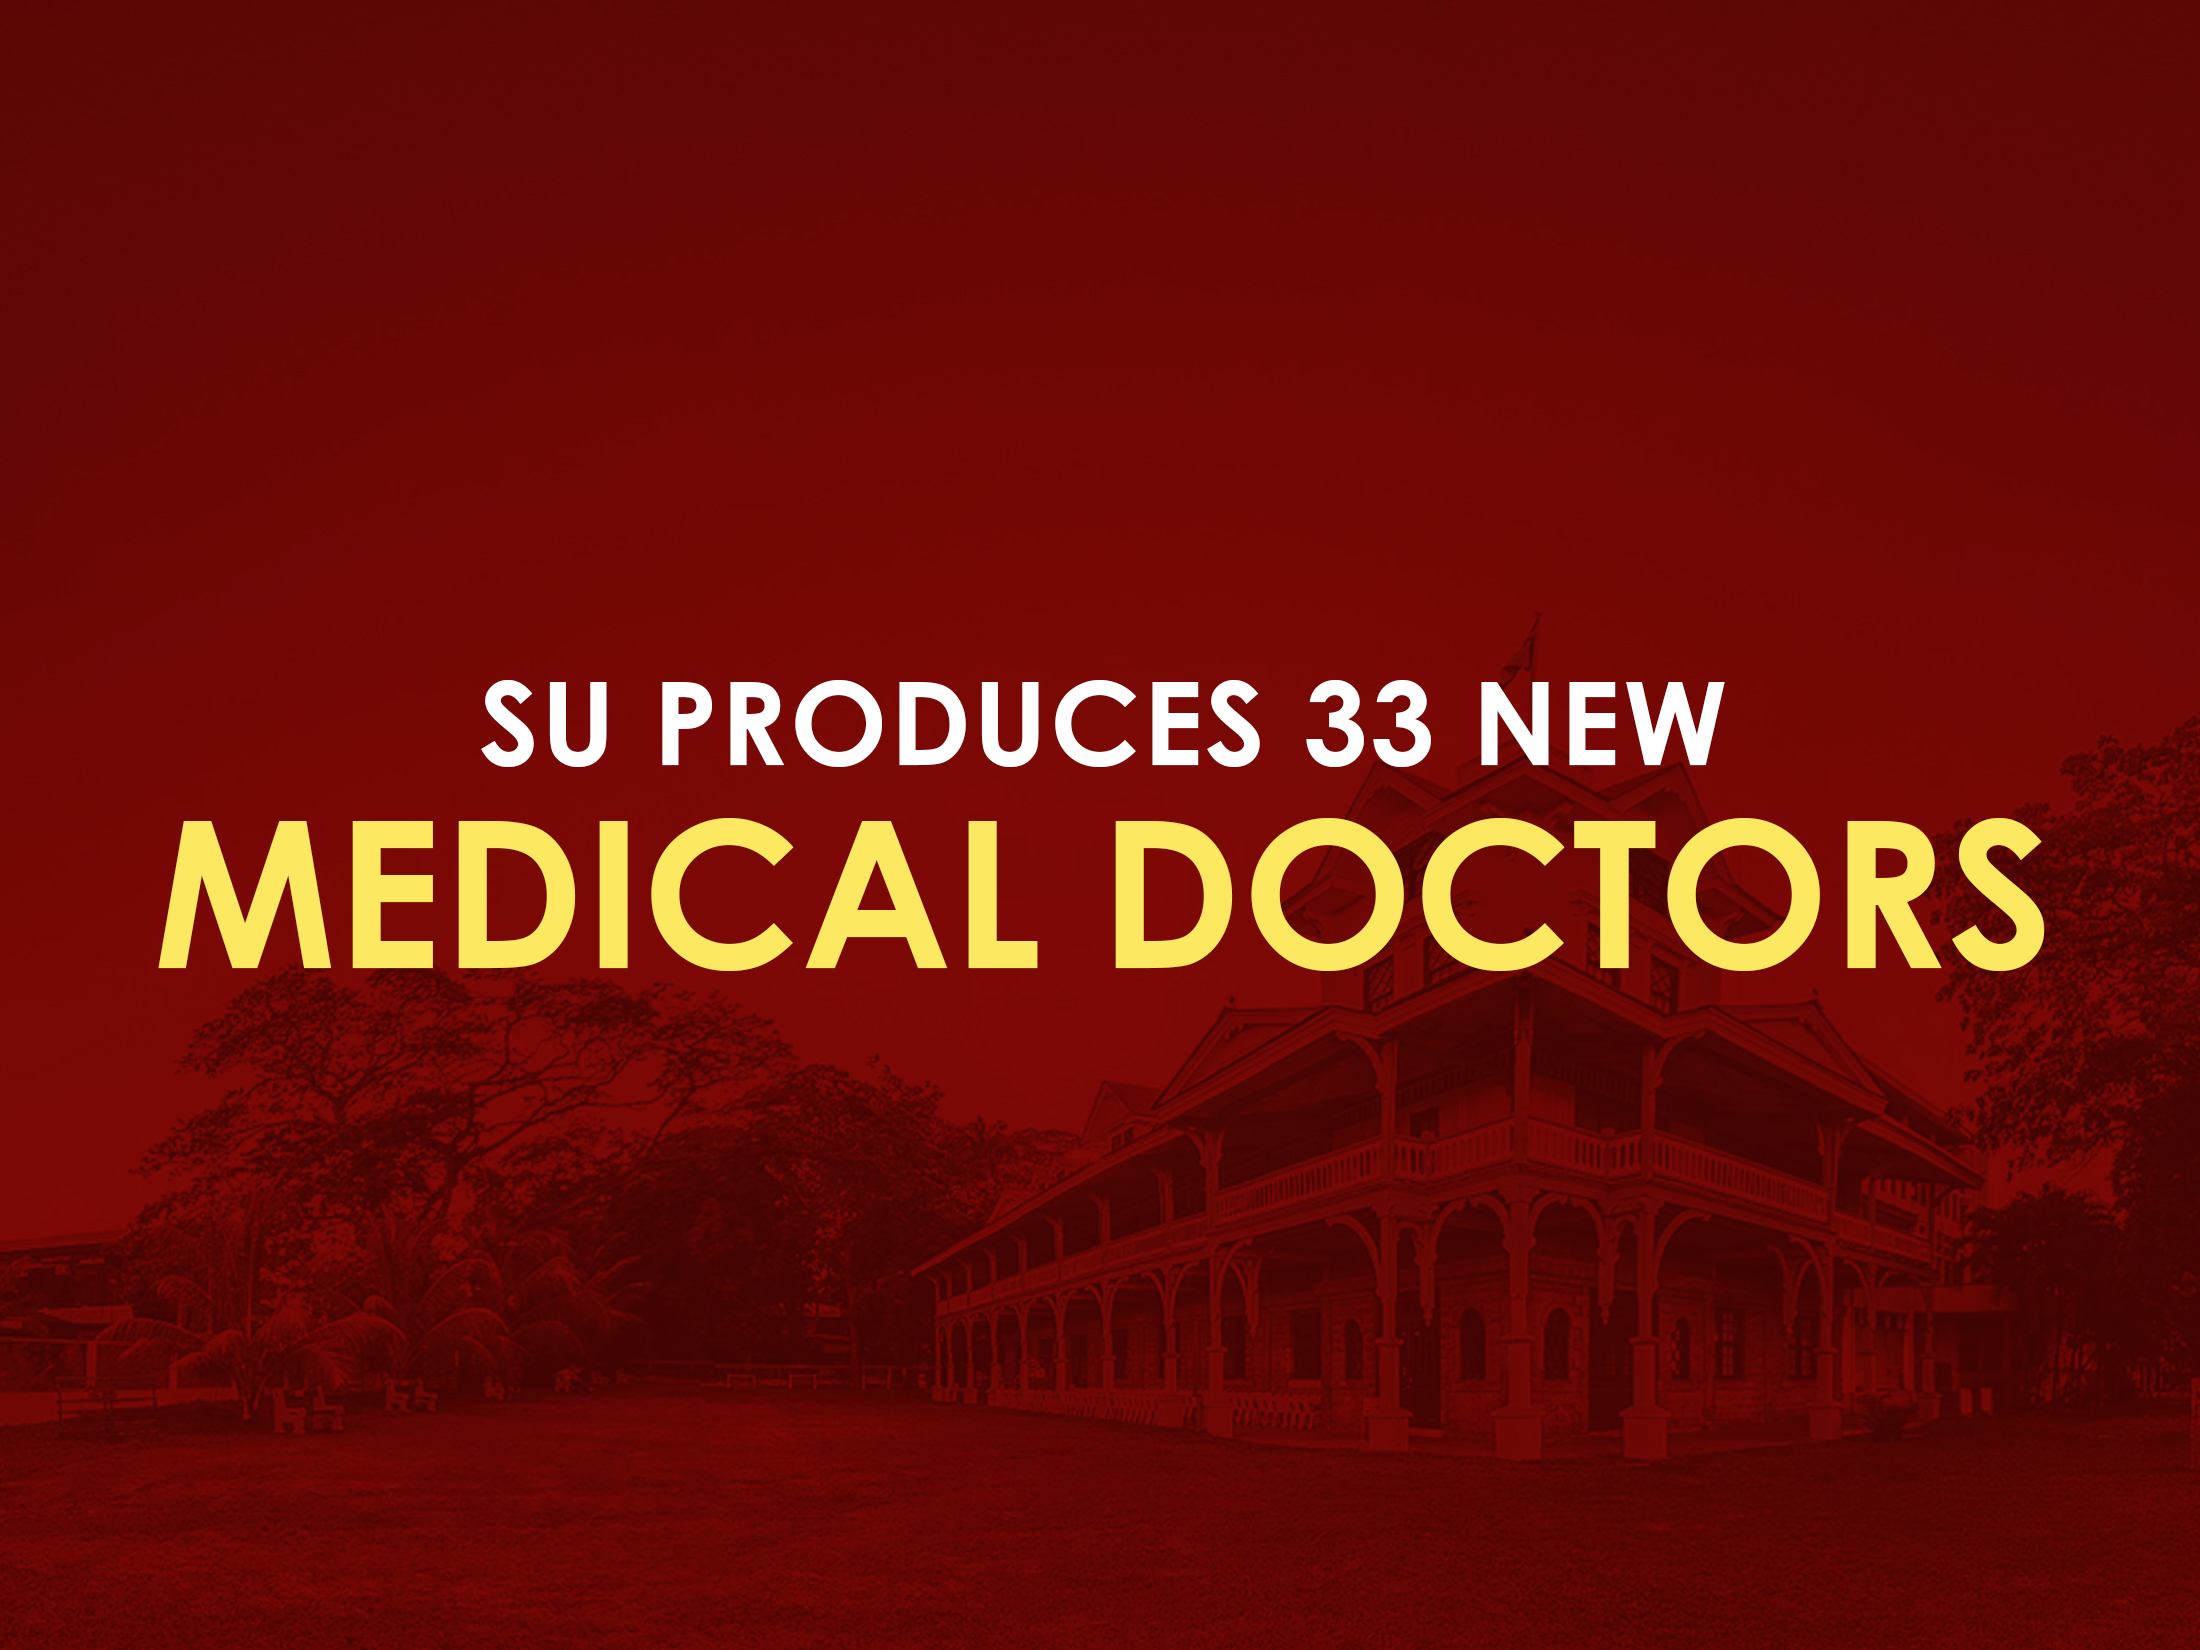 SU produces 33 new medical doctors